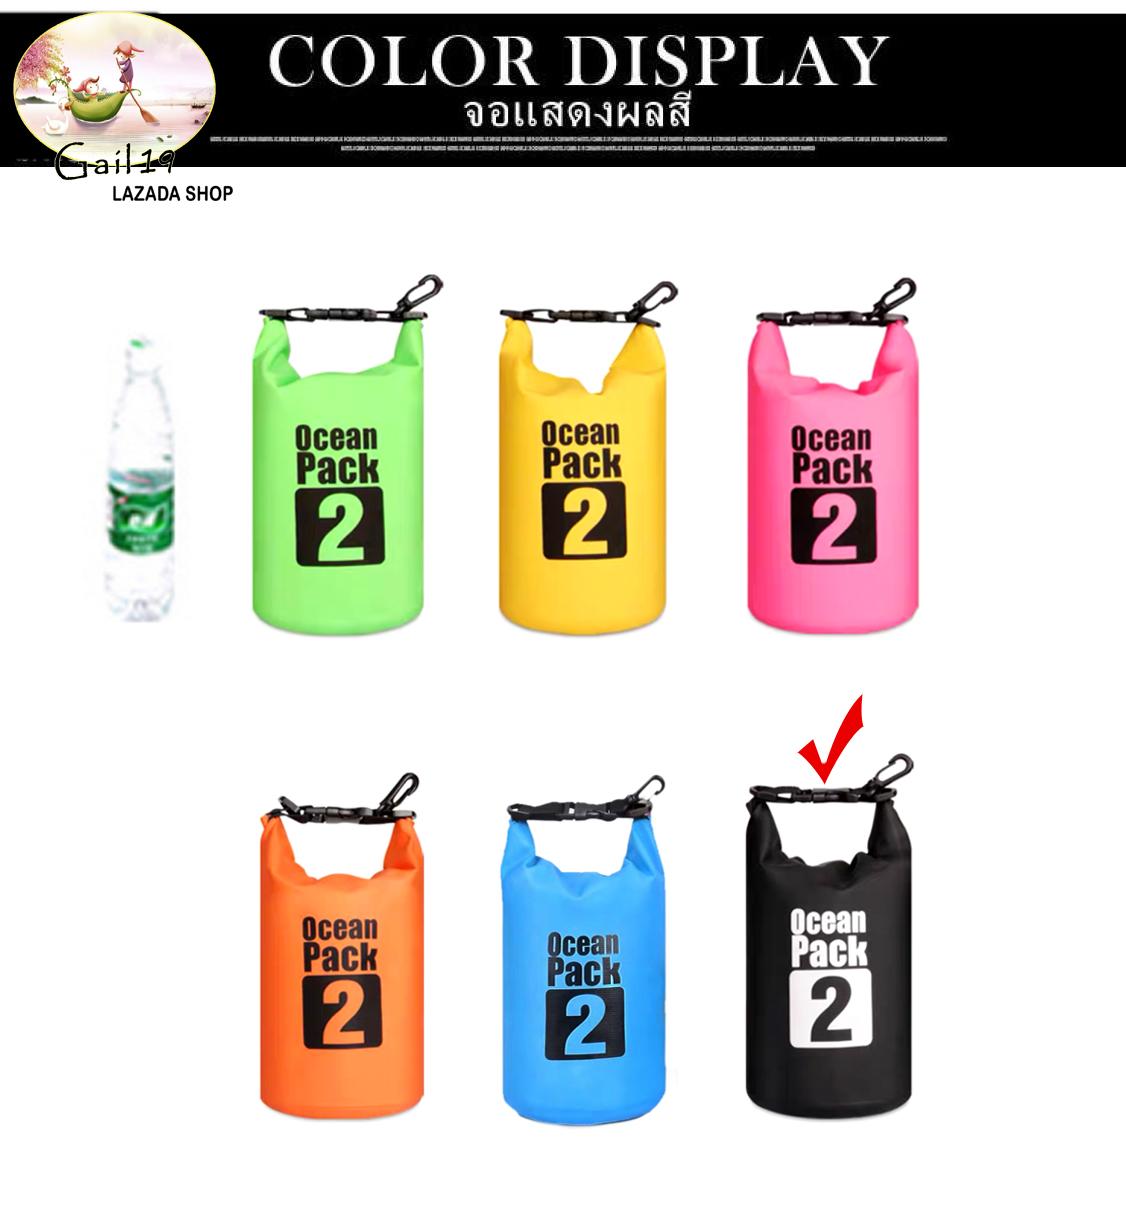 Ocean Pack 2L 6colors กระเป๋ากันน้ำขนาด2ลิตร มี6สีให้เลือก Ocean Pack 2L 6colors  2 liters waterproof bag (have 6 colors for choosing)